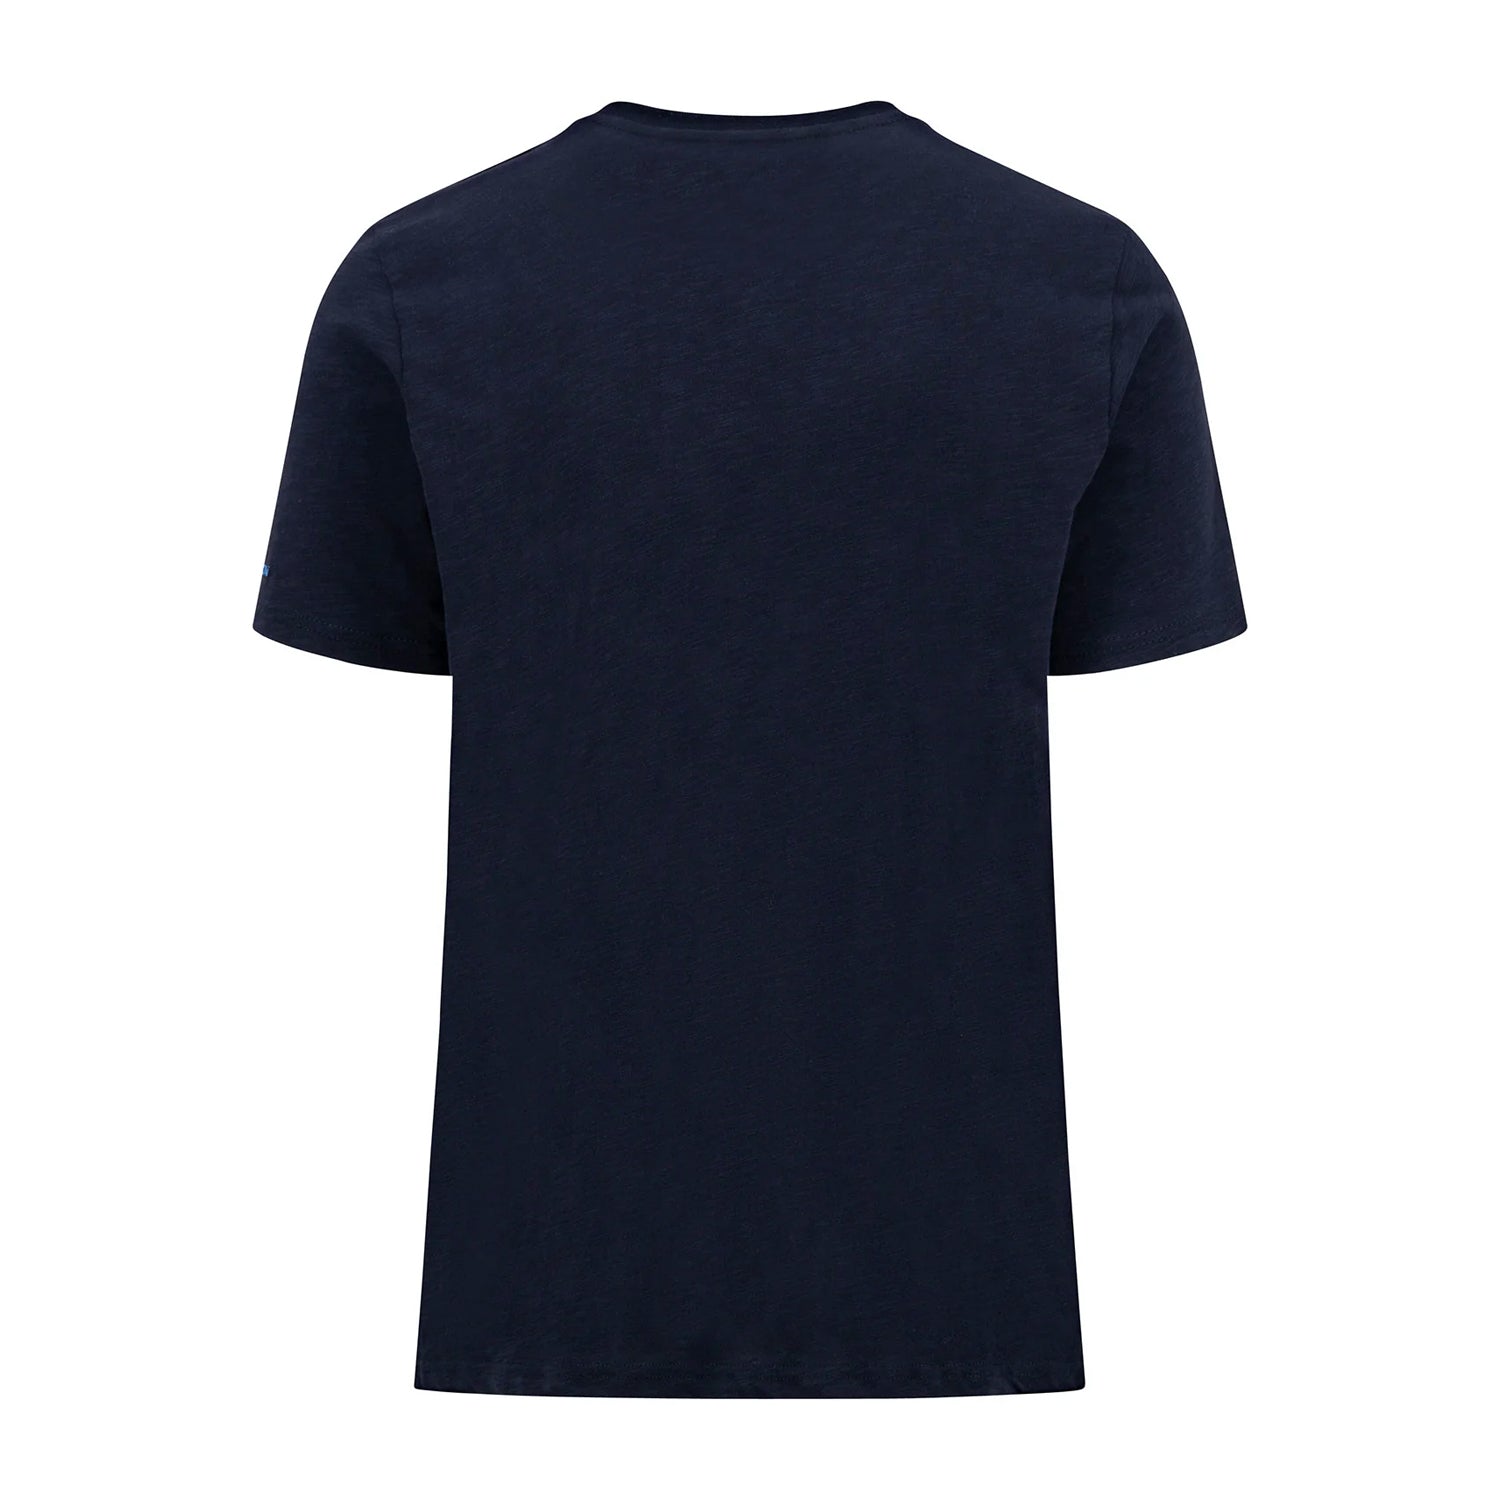 Fynch-Hatton Men's Navy T-Shirt